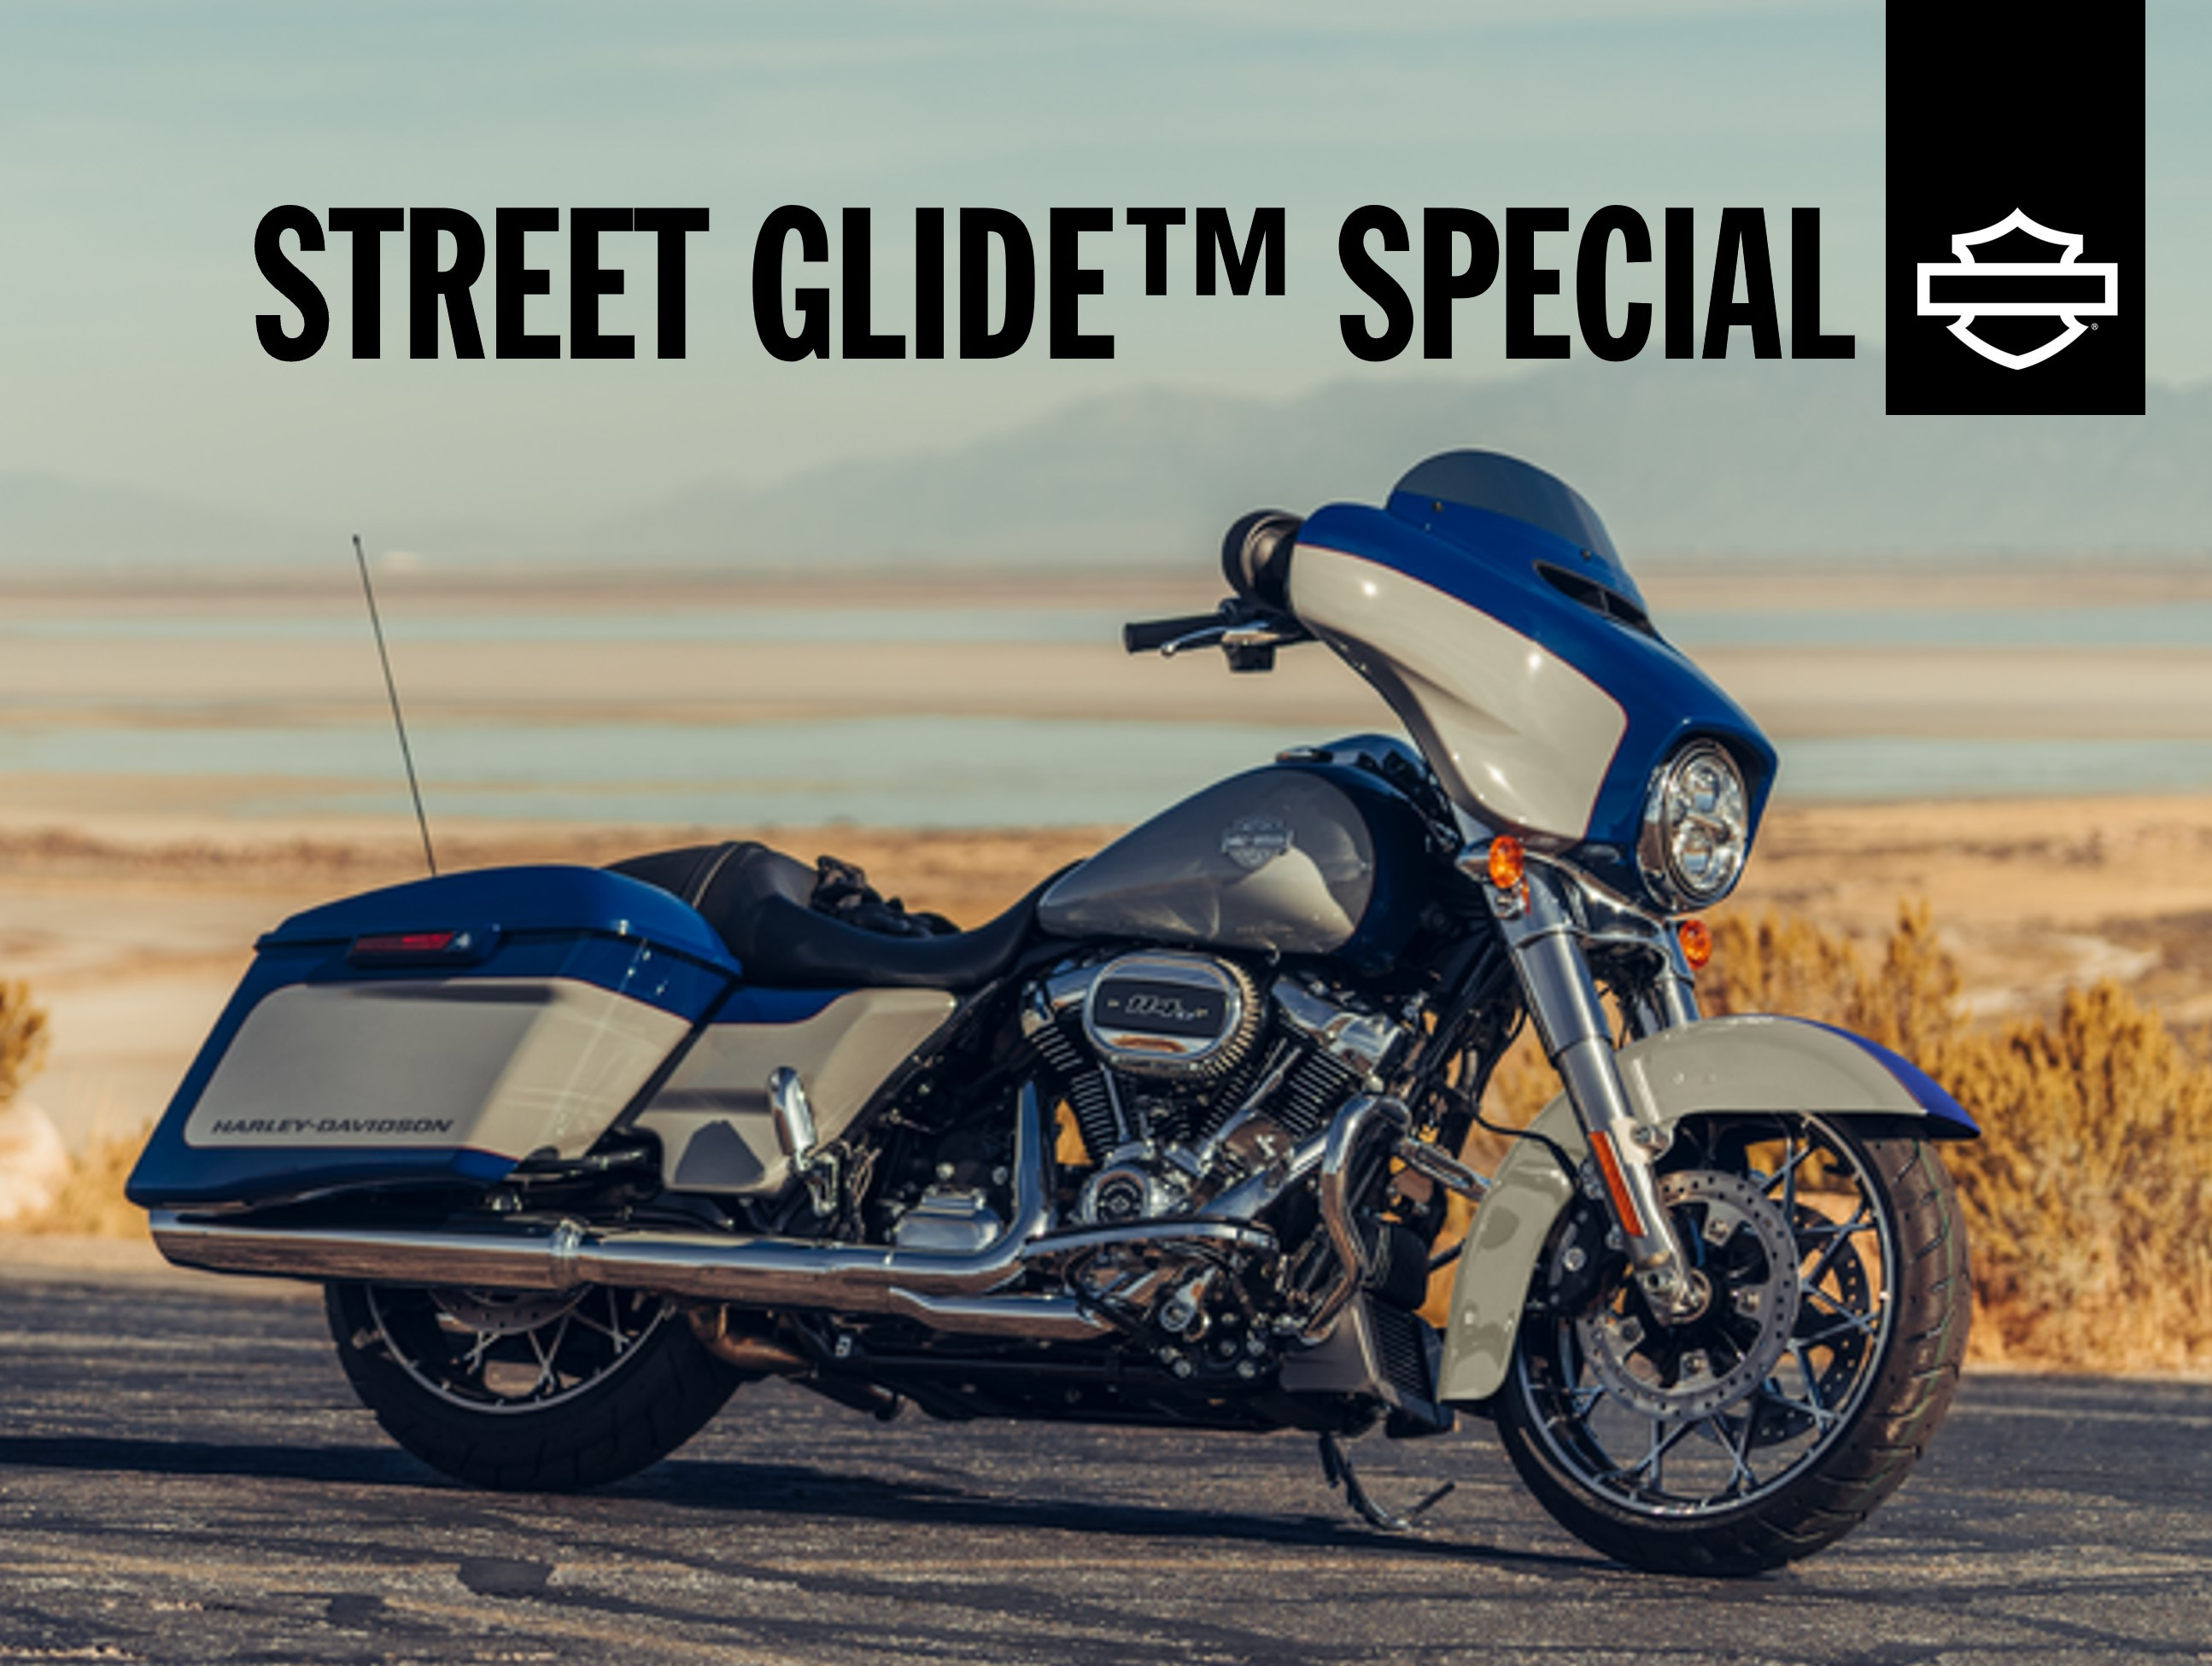 Street Glide Special